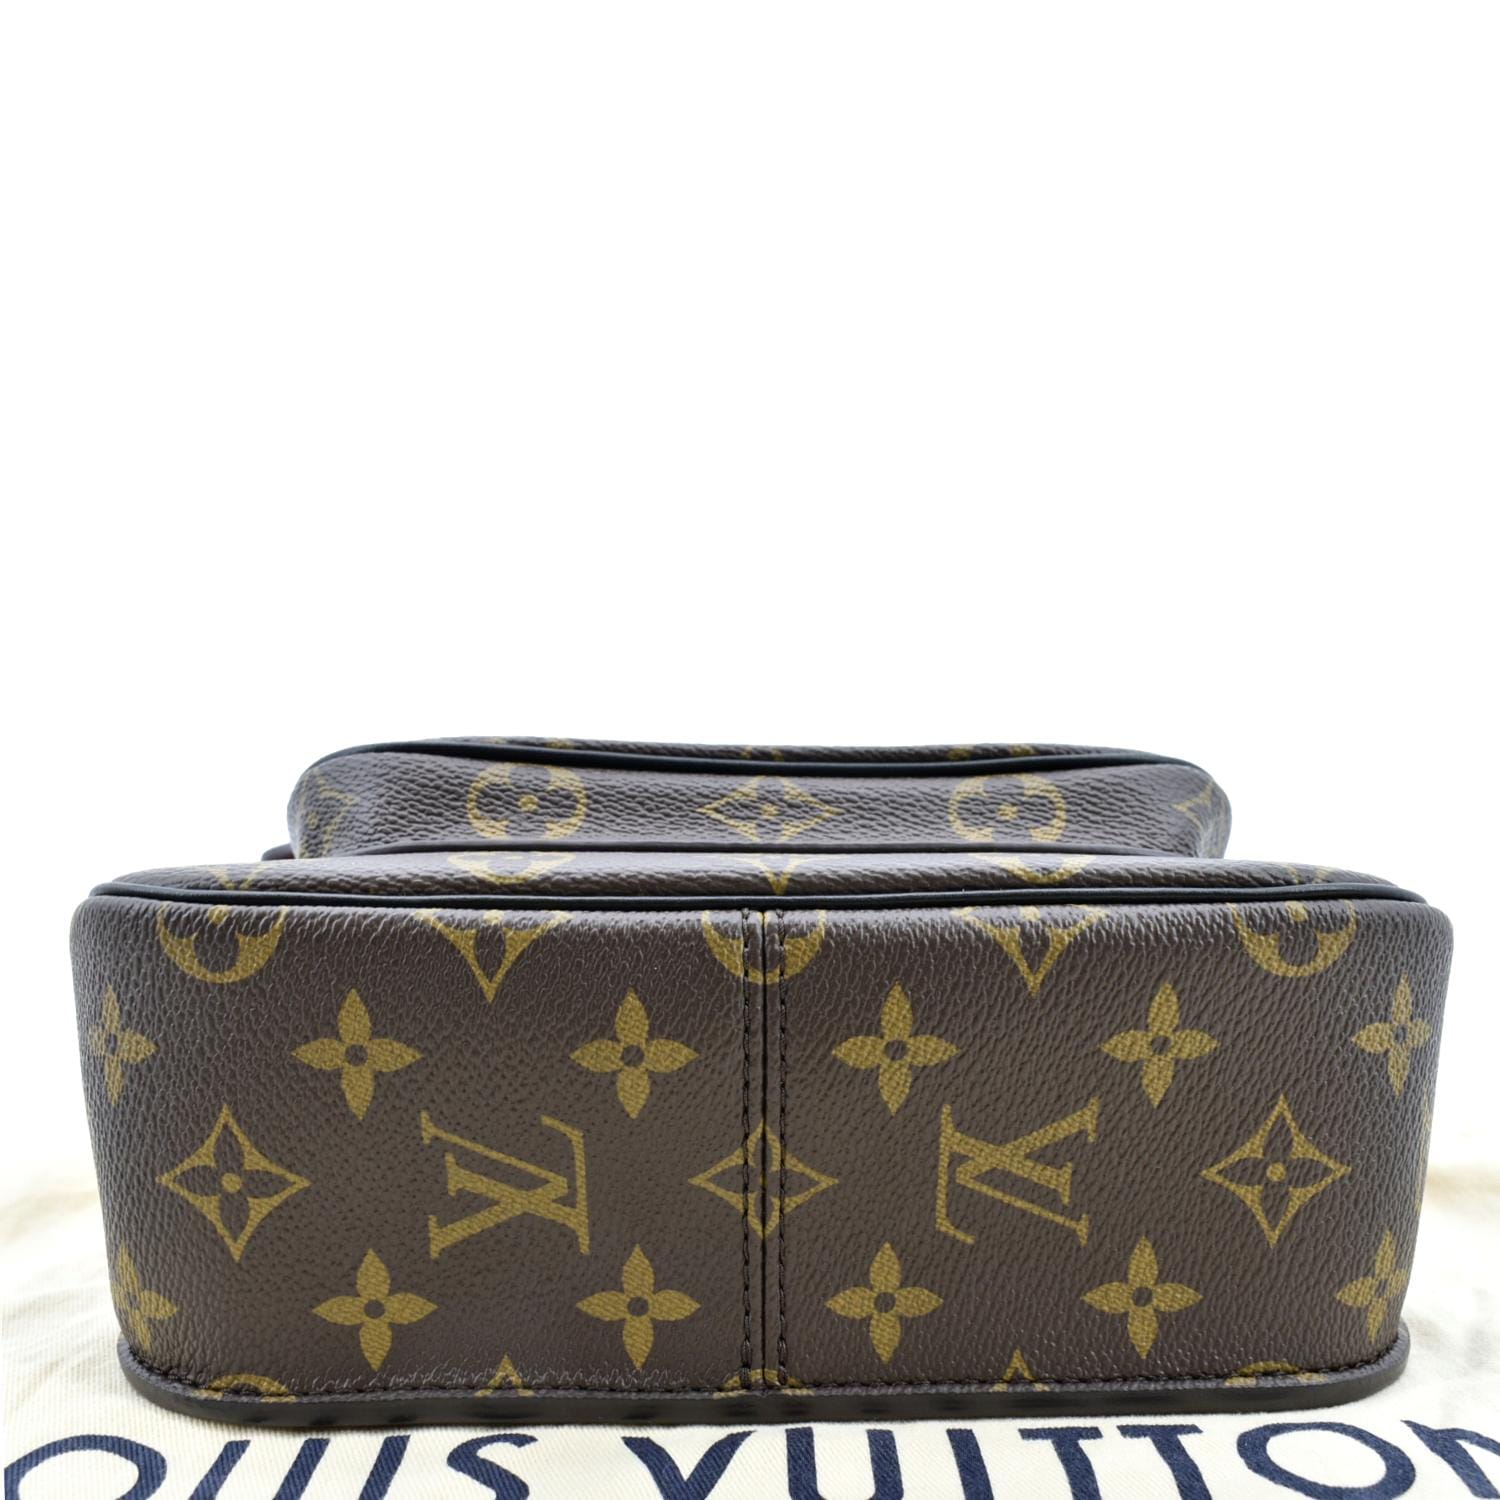 Louis Vuitton Passy Handbag Monogram Canvas Brown